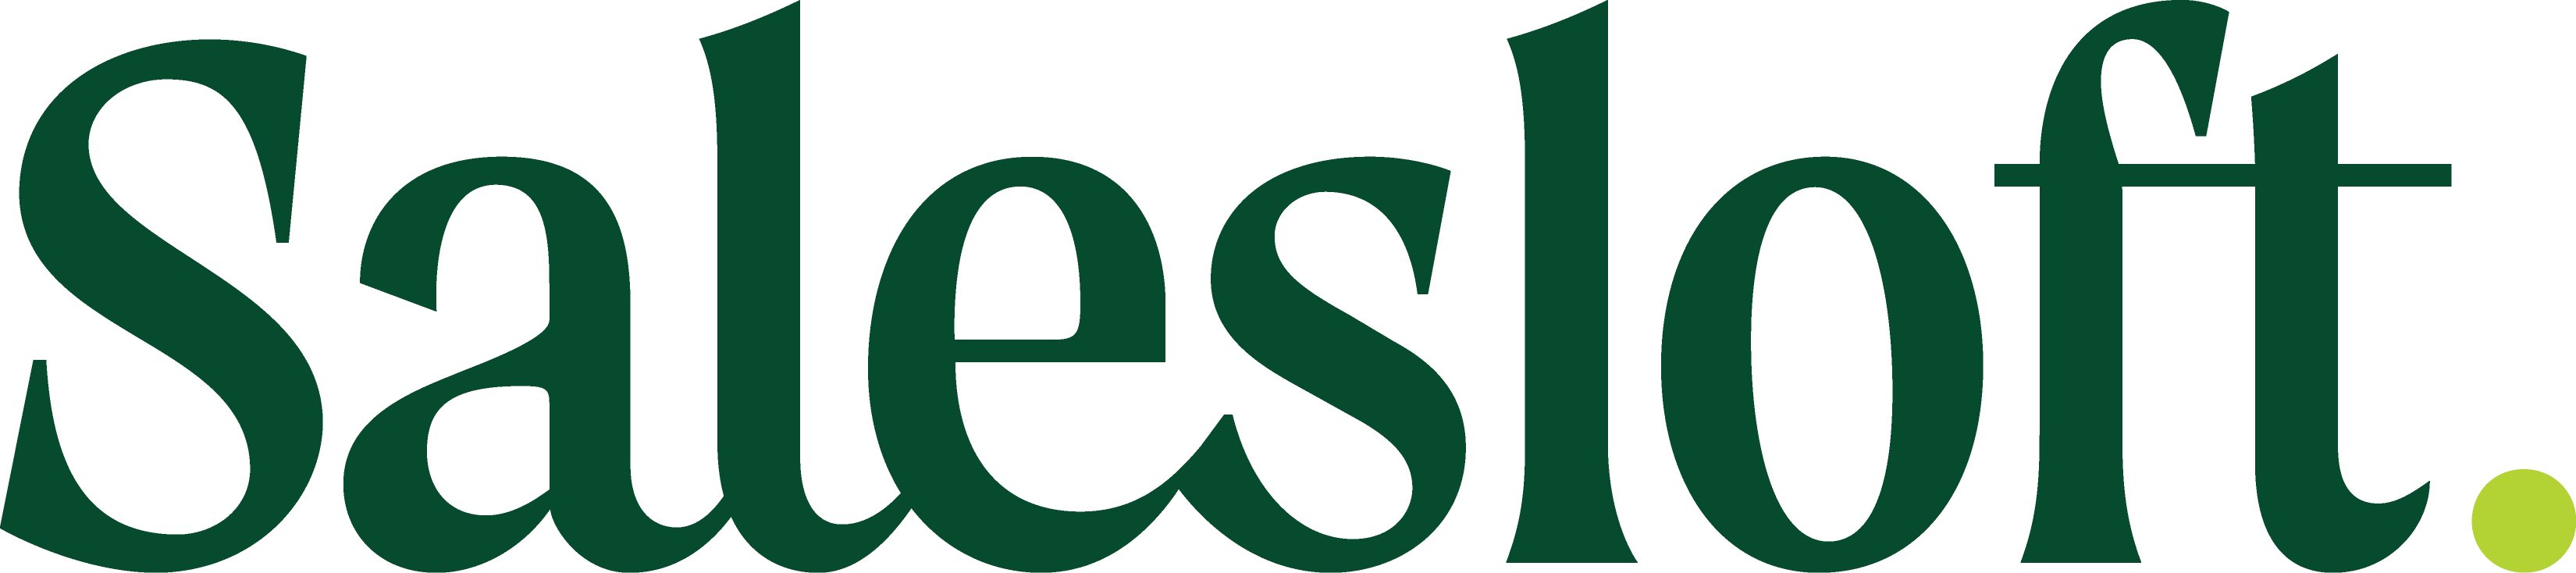 salesloft-logo-full-color-rgb